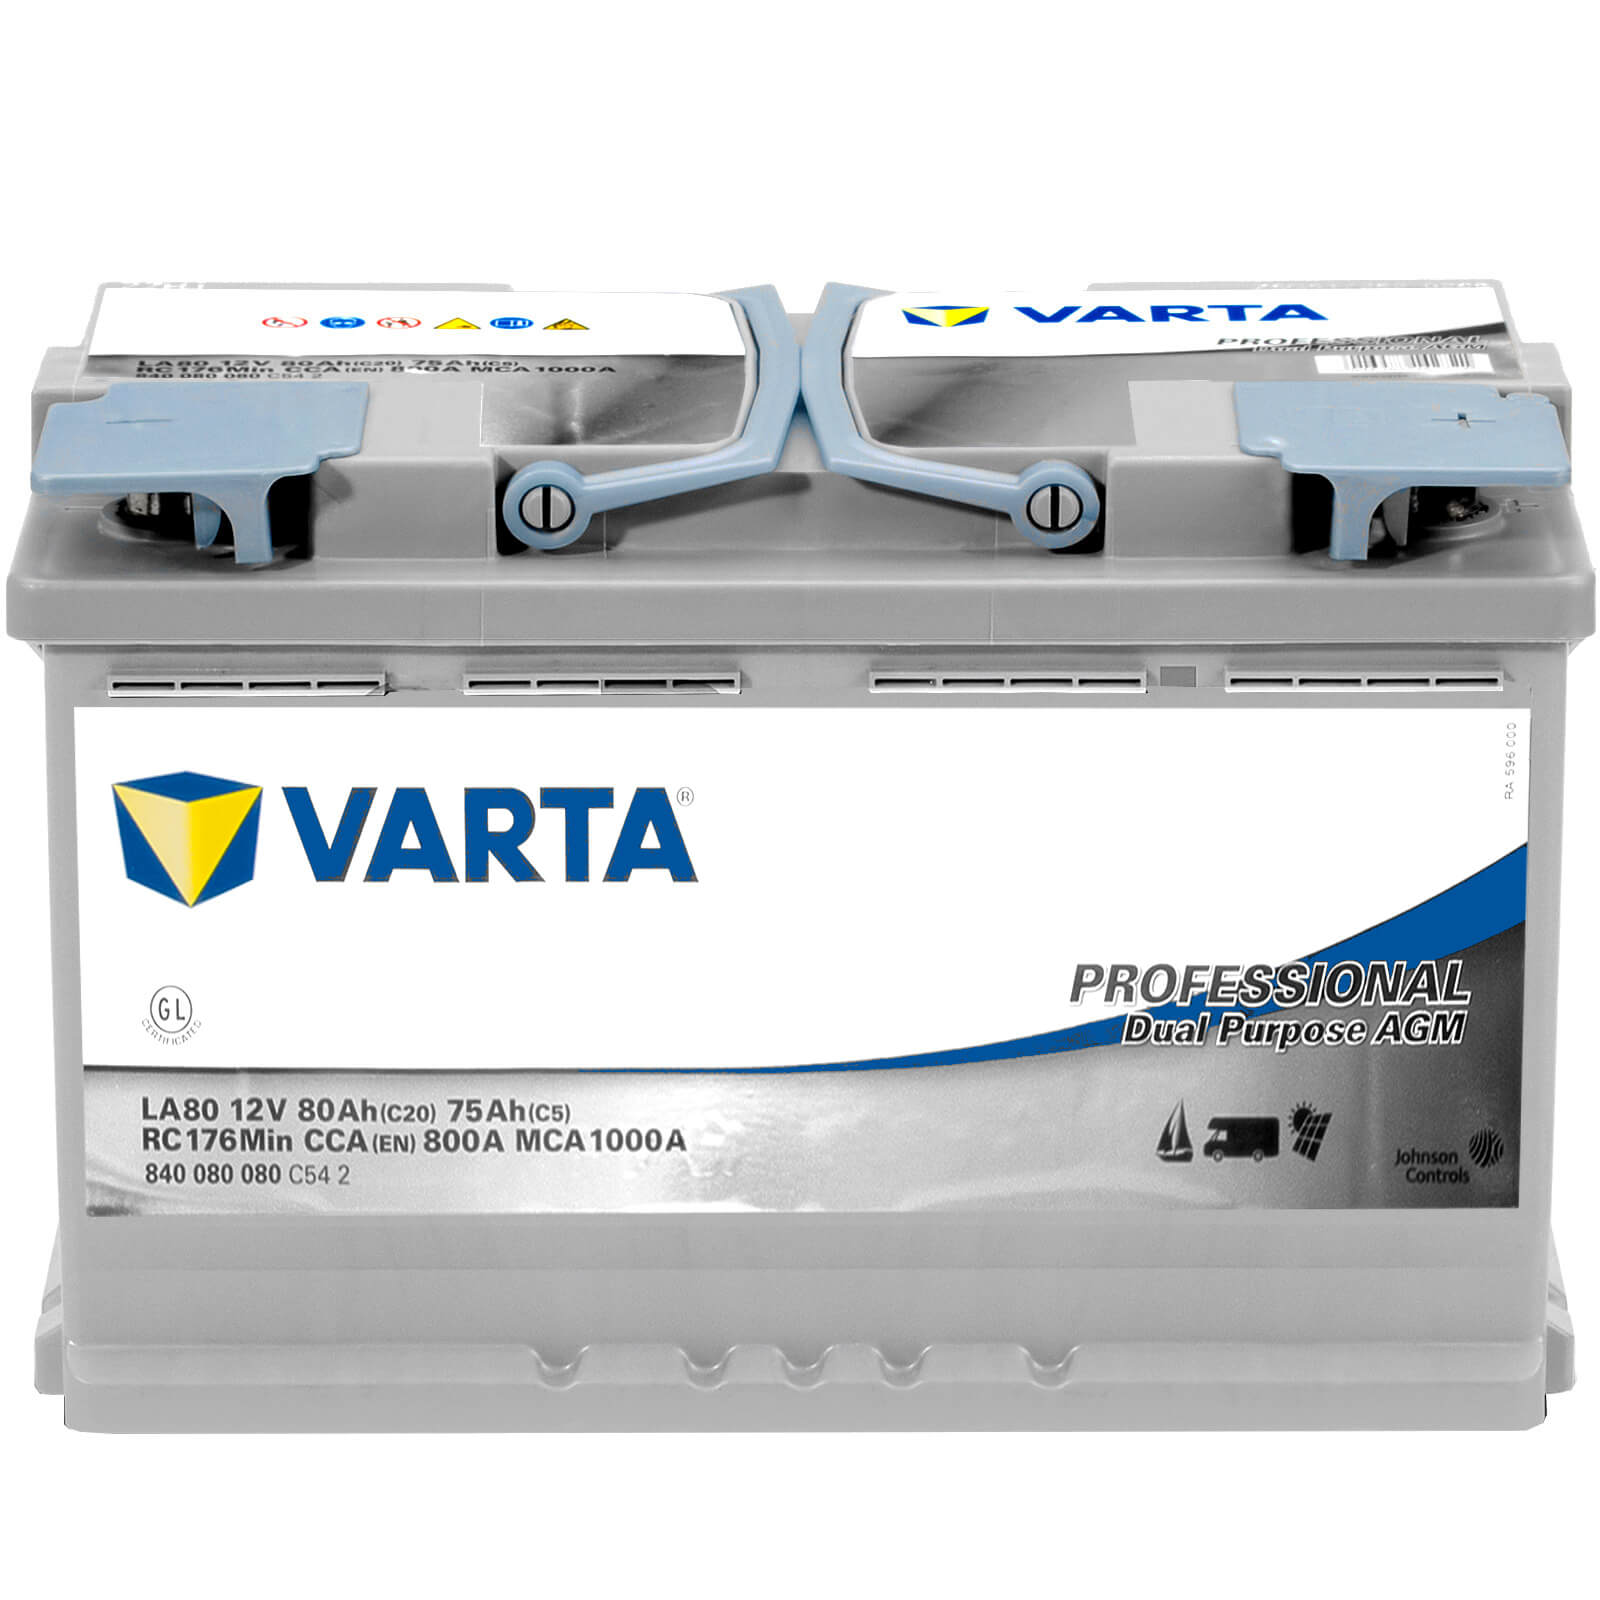 Varta Autobatterie Starterbatterie F21 12V 80Ah 800A Akku für Audi Bmw